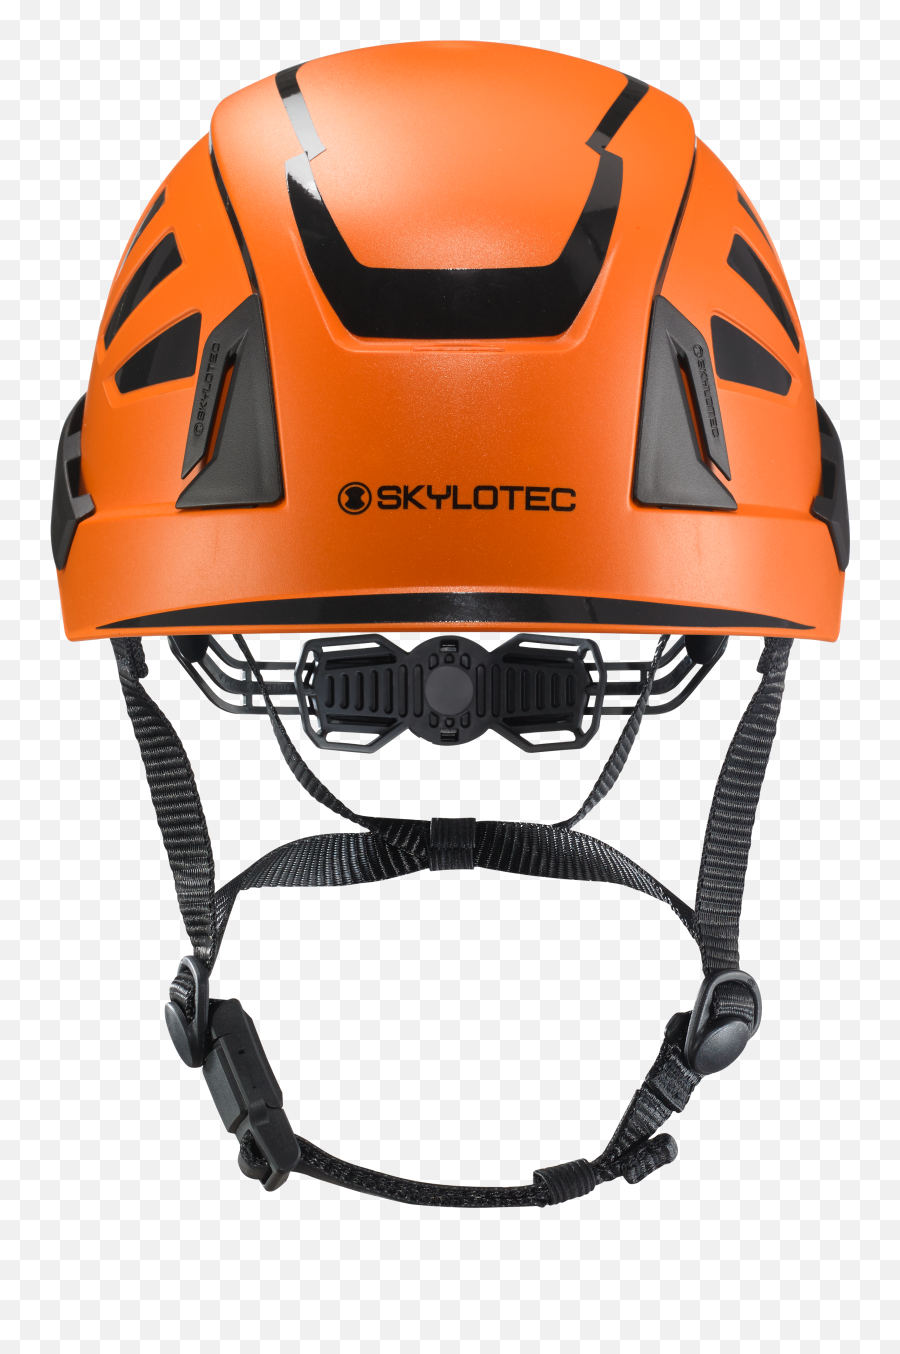 Download Helmet Protective Personal Grx High Equipment - Skylotec Helmet Png,Icon Mexican Helmet